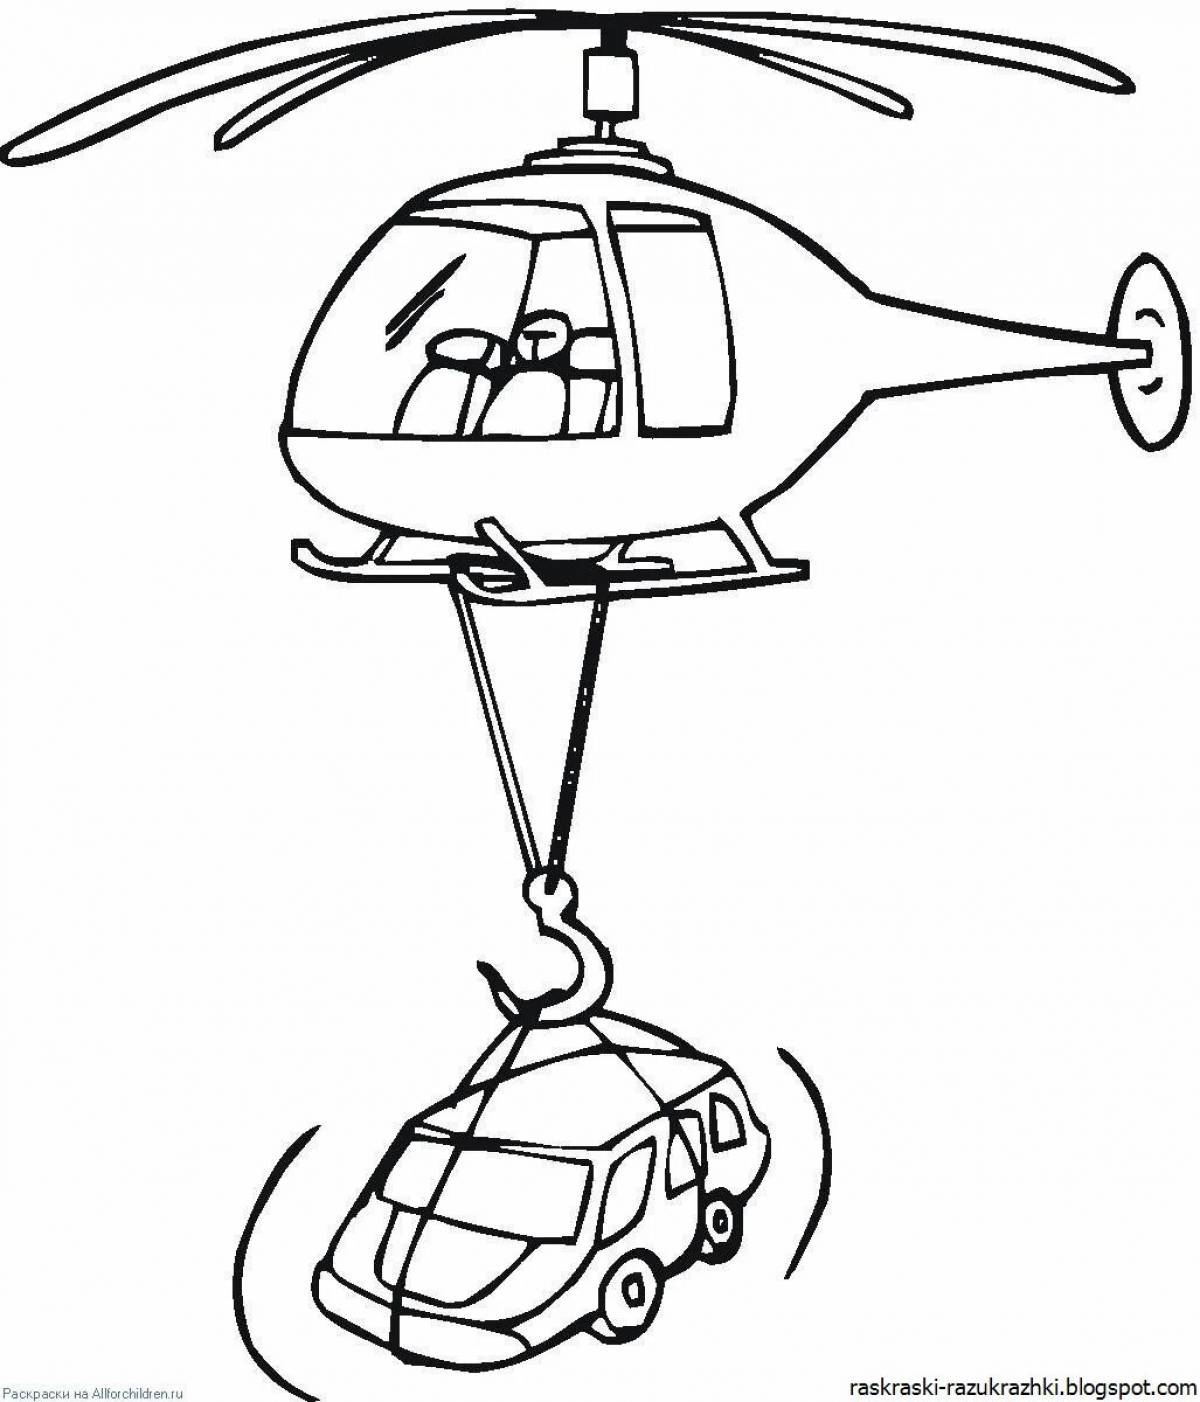 Children's helicopter #23